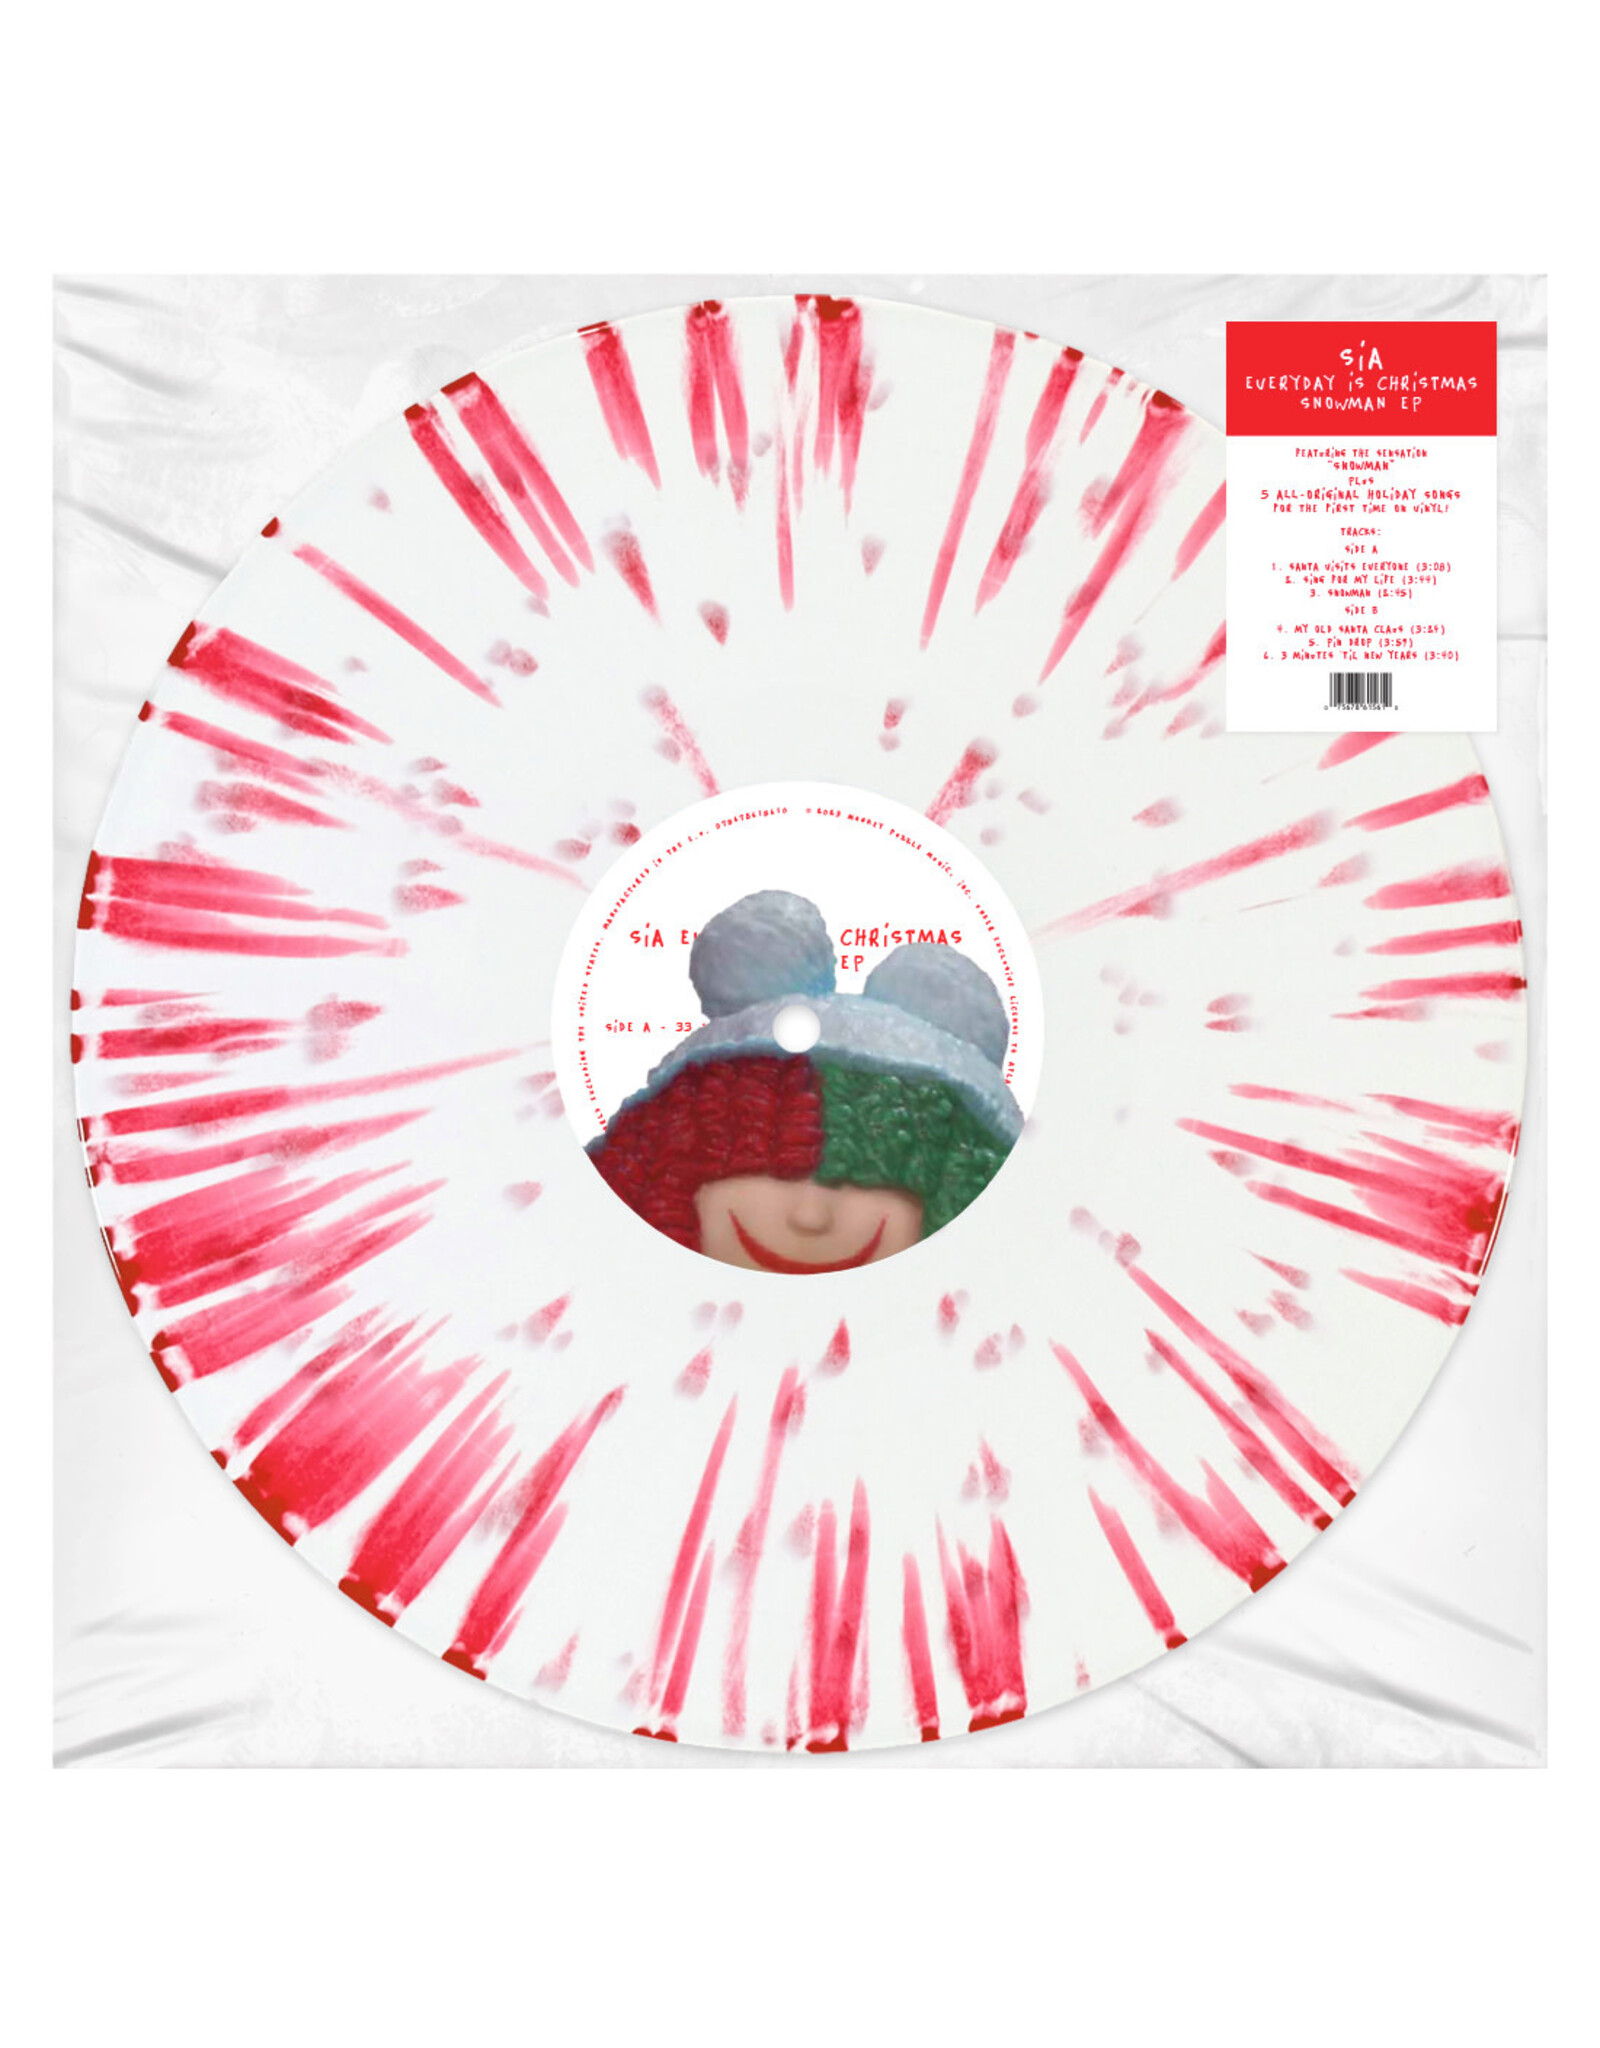 Sia - Everyday Is Christmas: Snowman EP (Exclusive Splatter Vinyl)